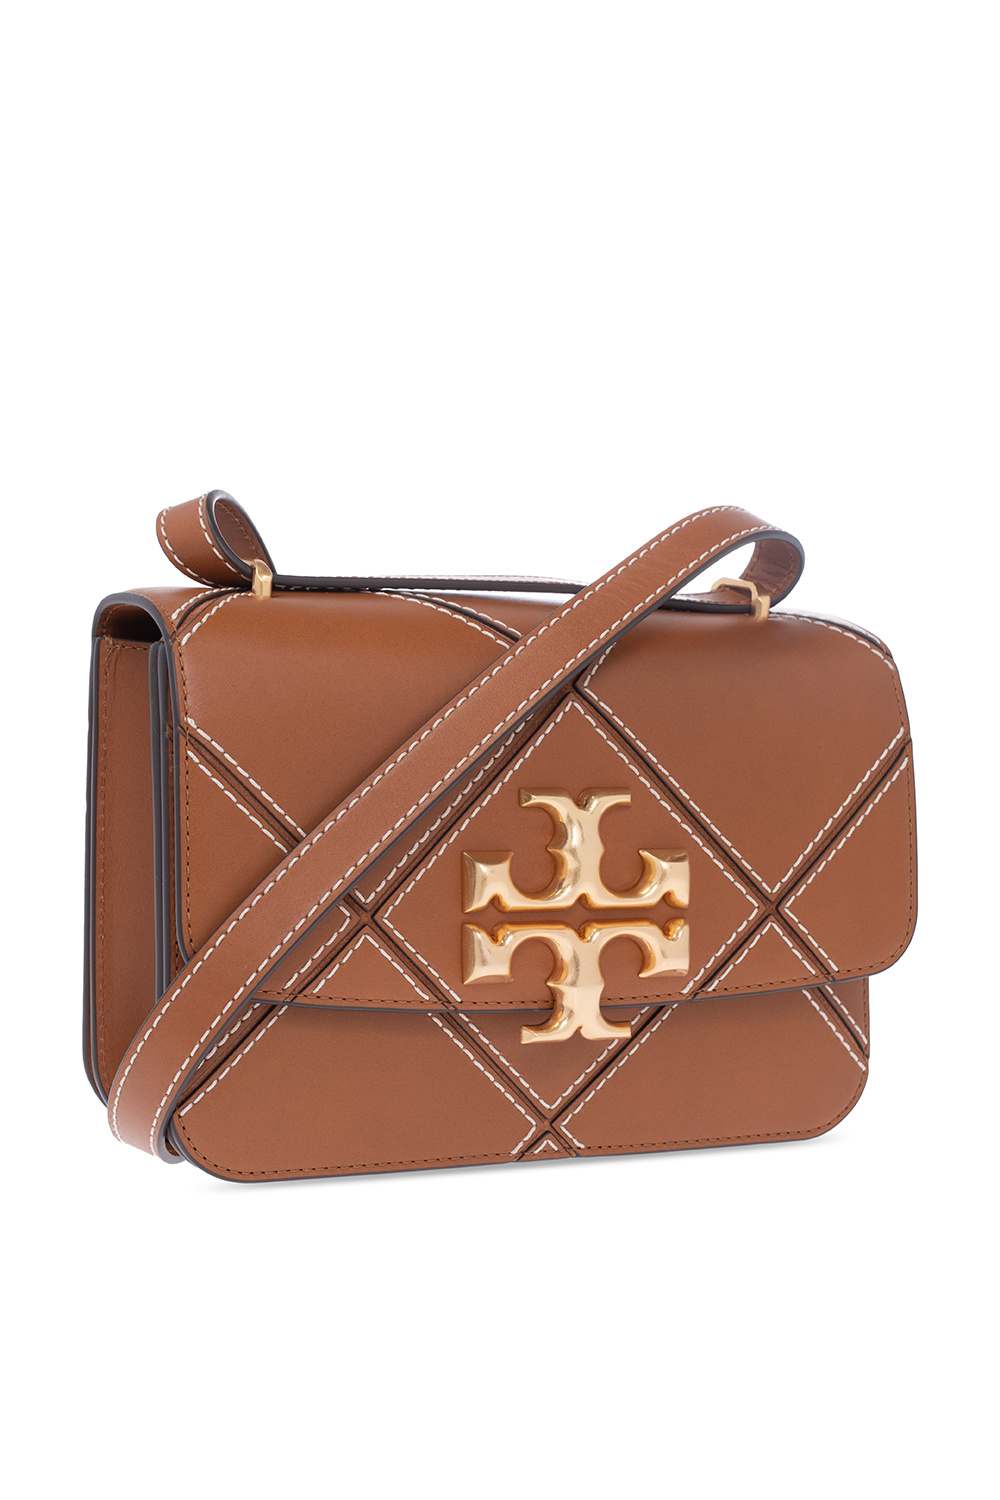 Tory Burch 'Eleanor Diamond' leather shoulder bag | Women's Bags | Vitkac